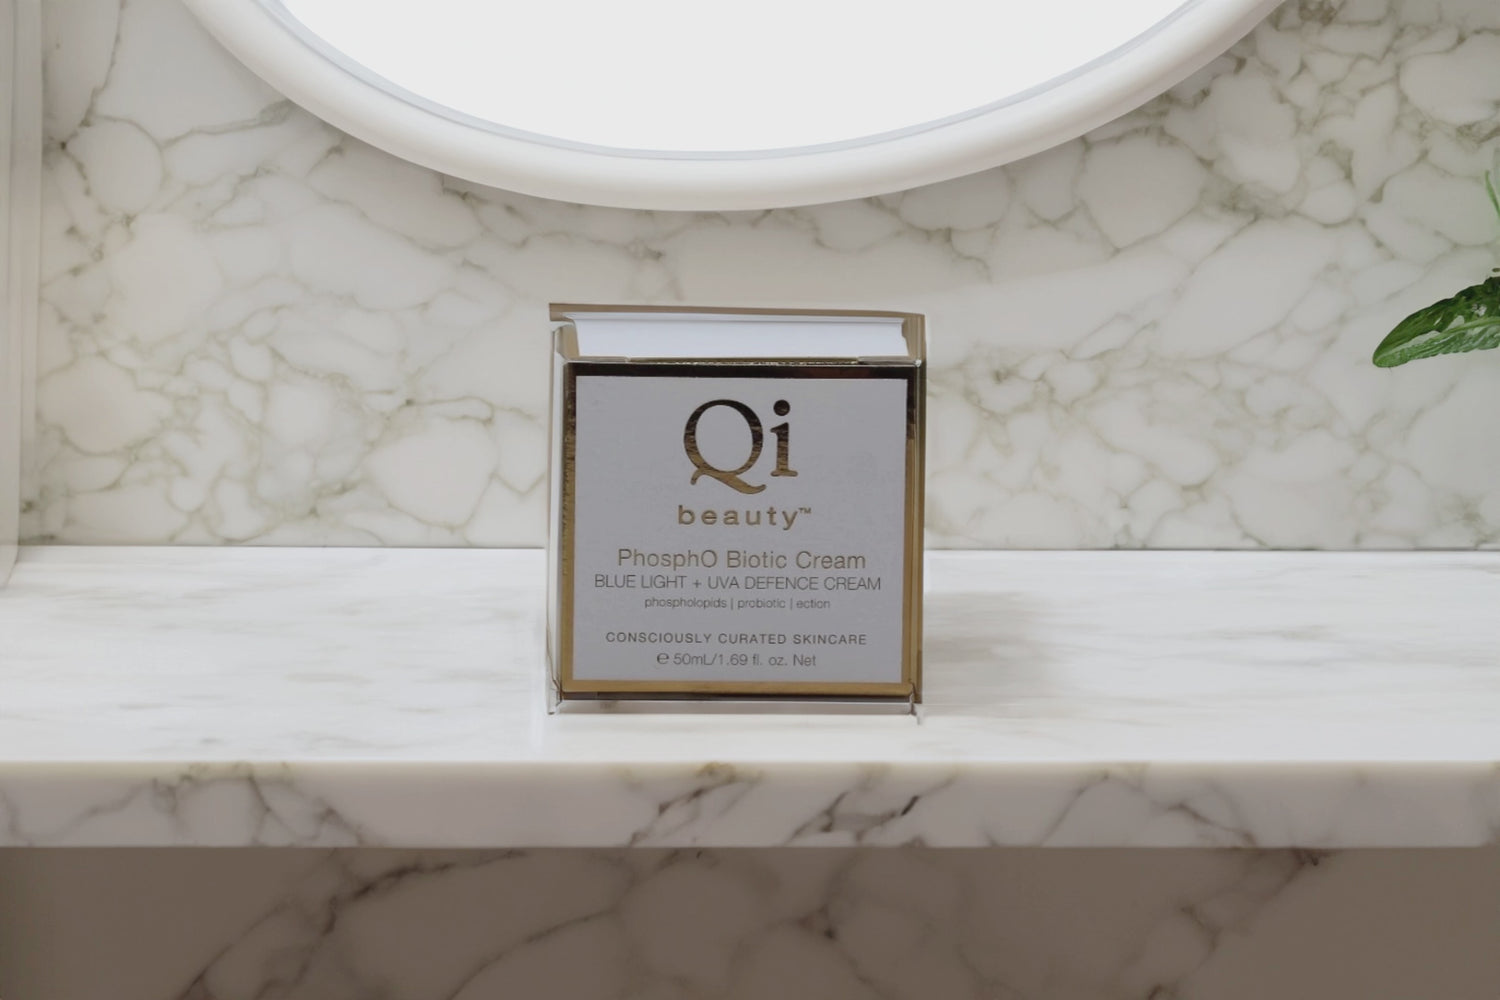 Qi beauty - Australian Skin Care – Qi beauty International